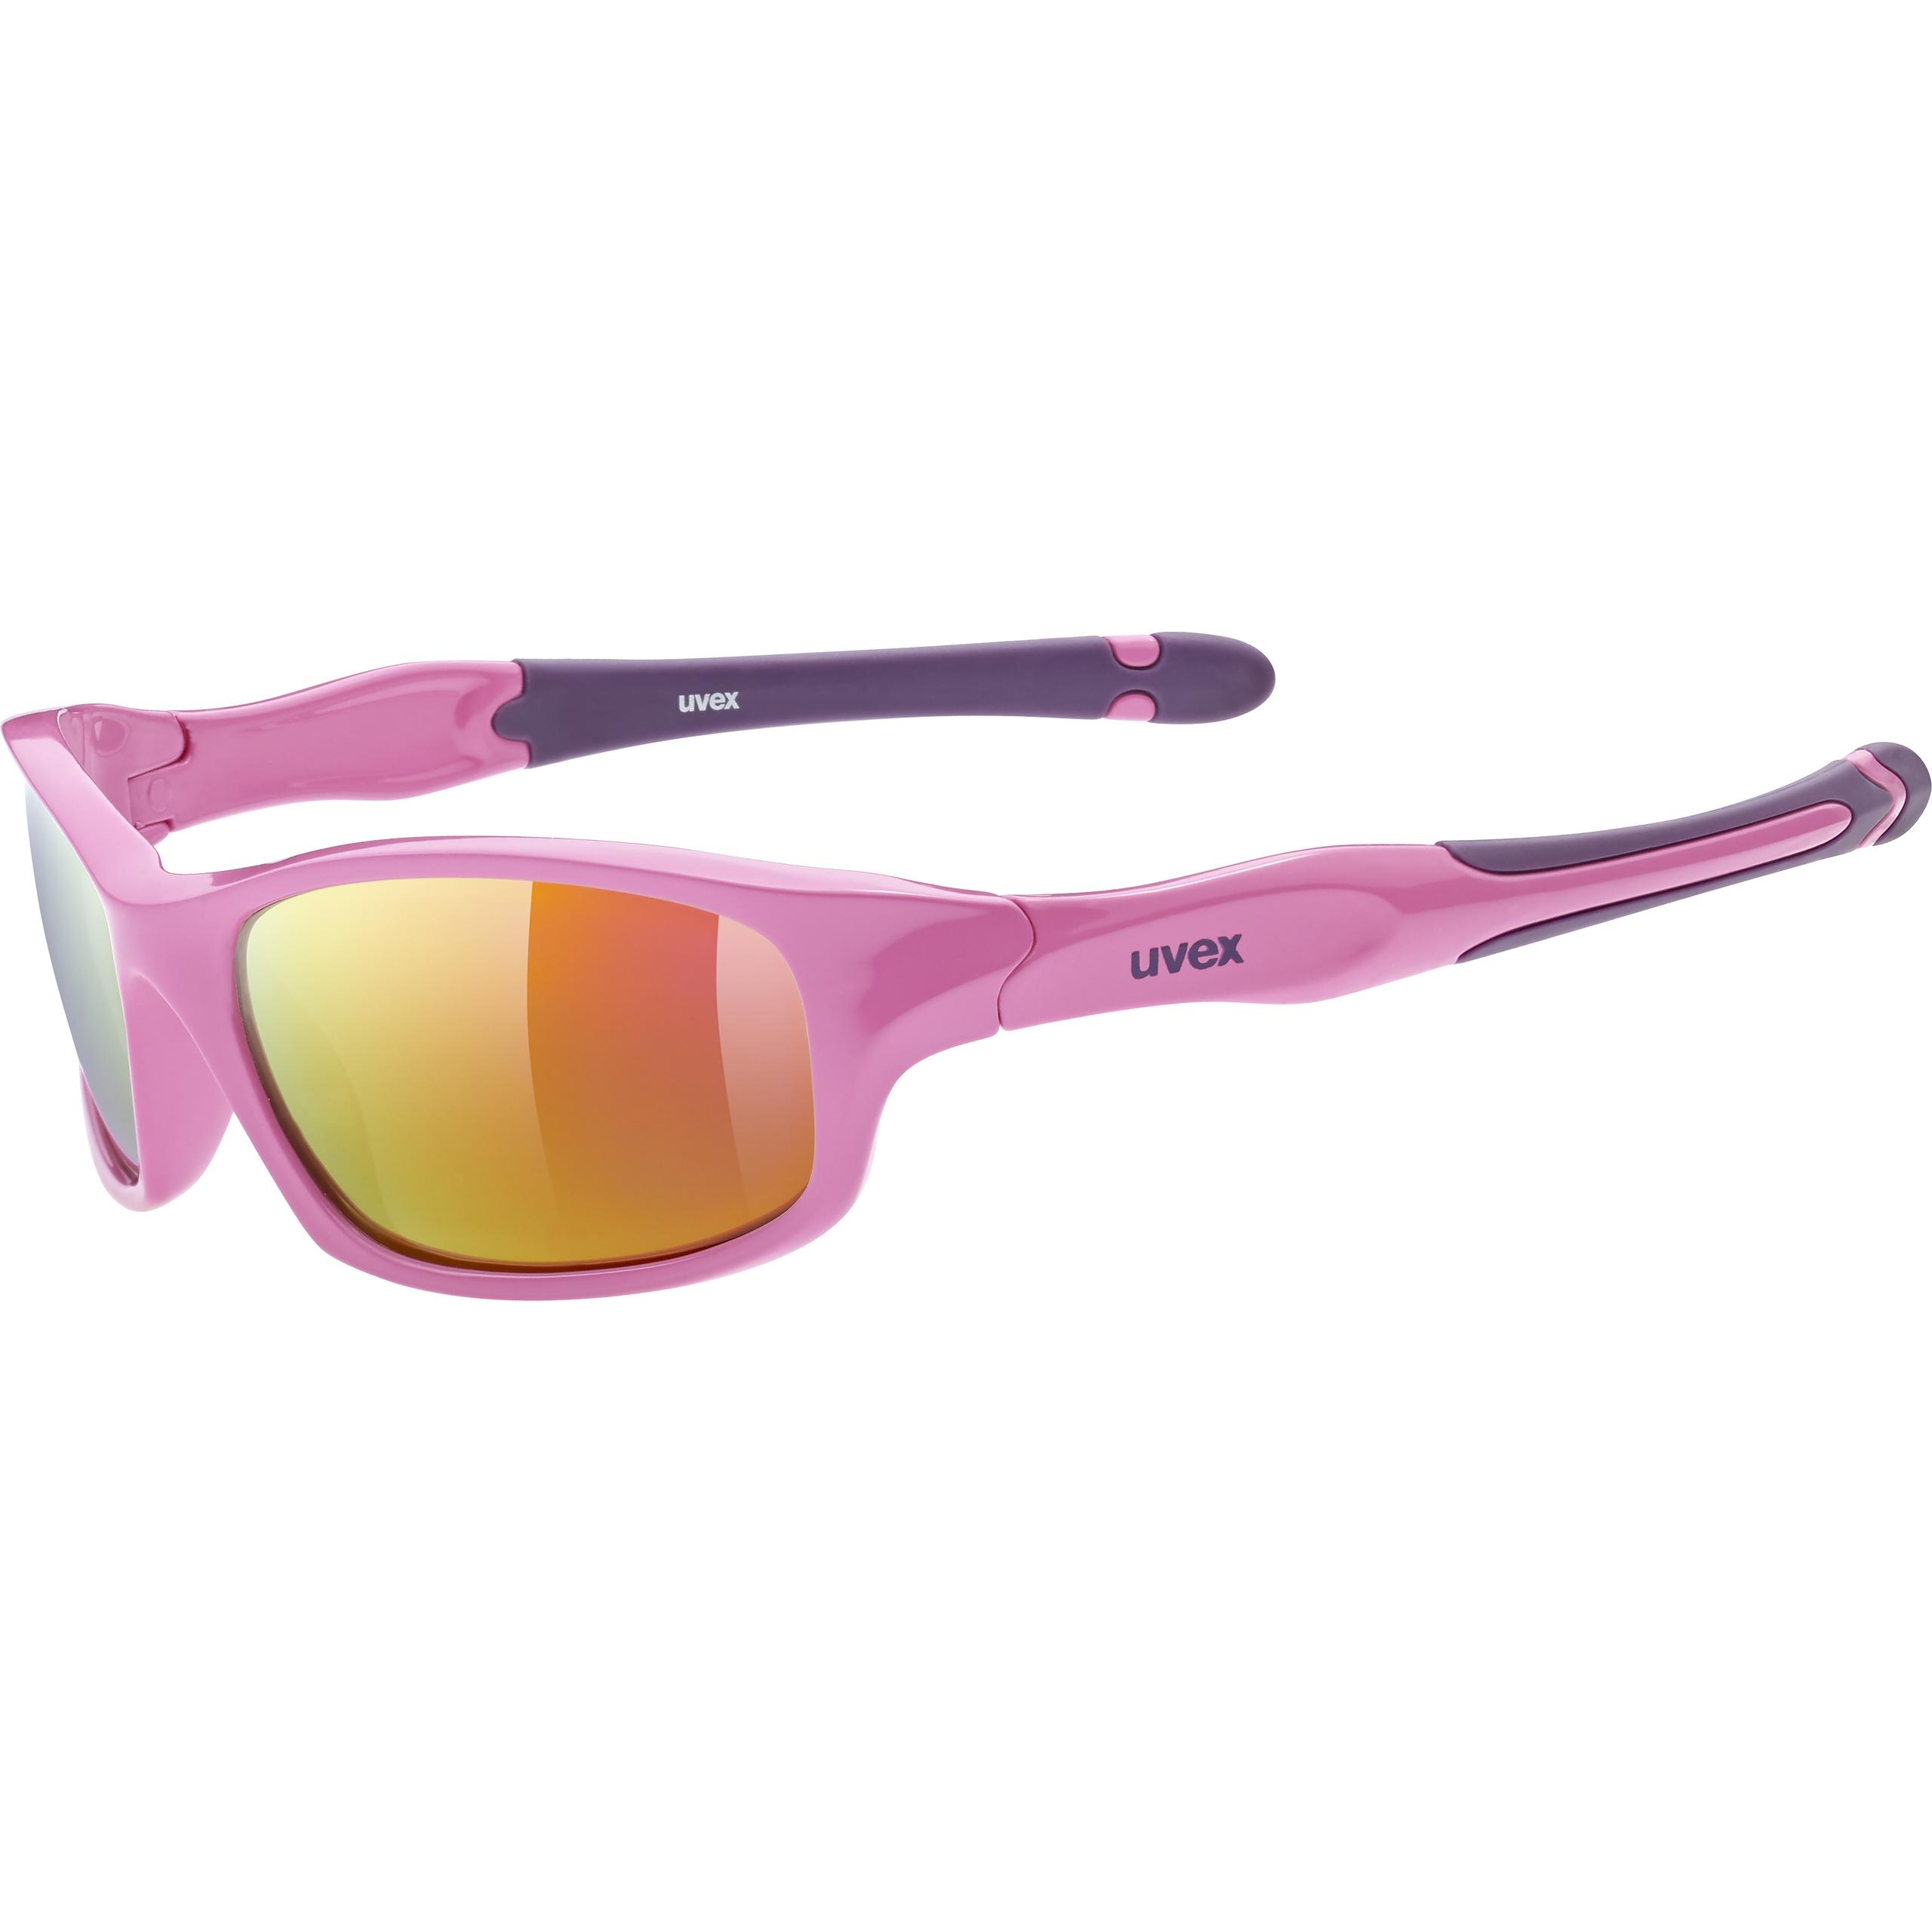 Kinder-Sonnenbrille sportstyle 507, pink purple